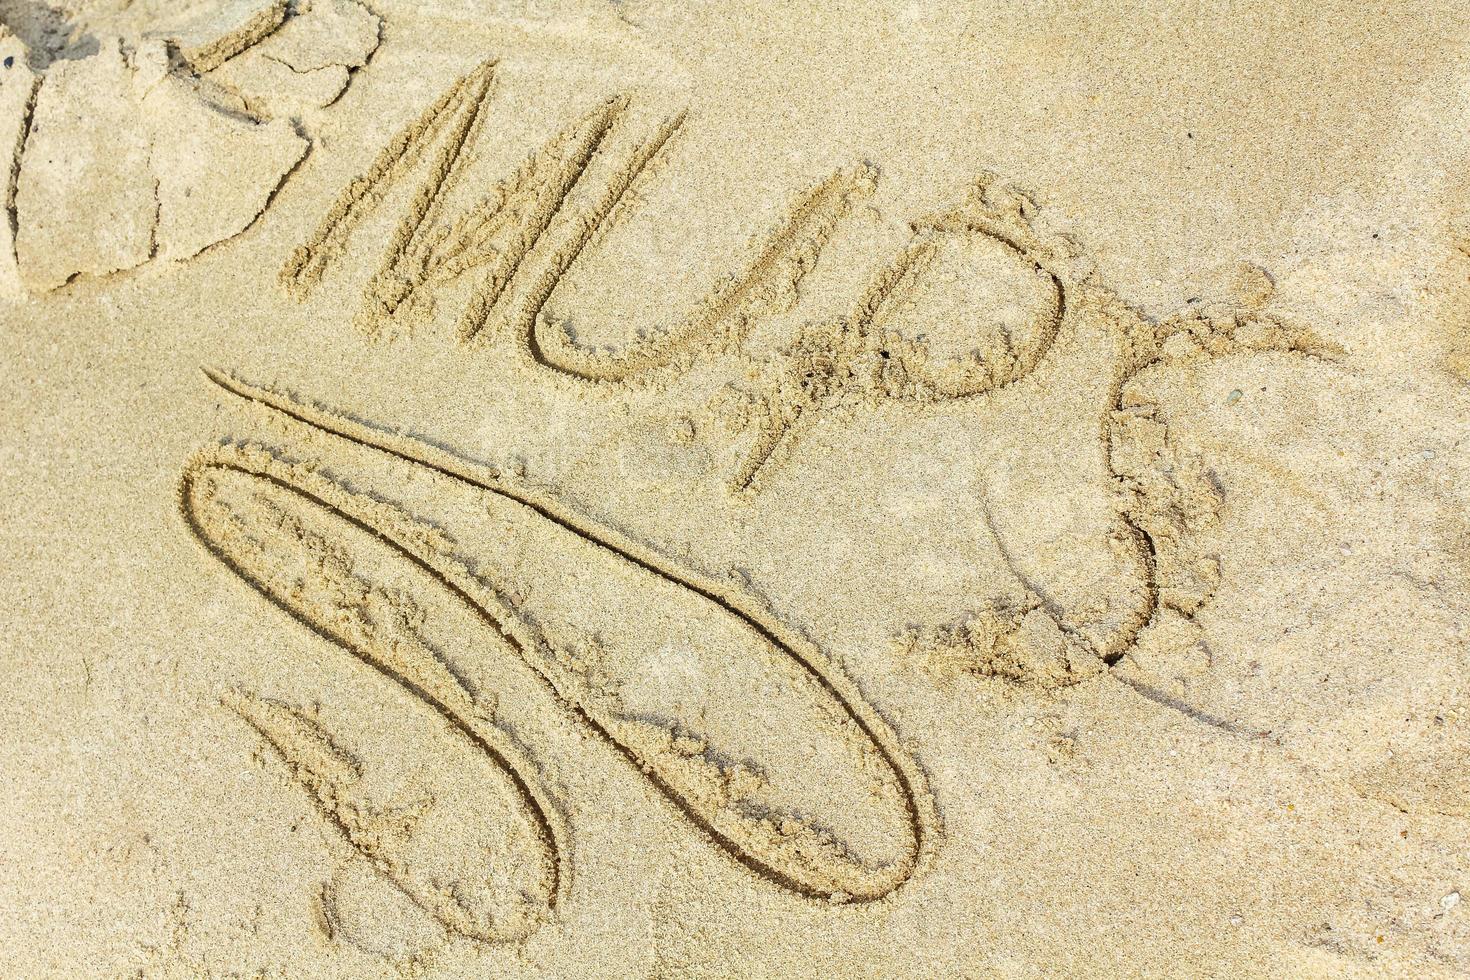 mar de wadden esteros texto escrito en aguilucho arenoso arena alemania. foto